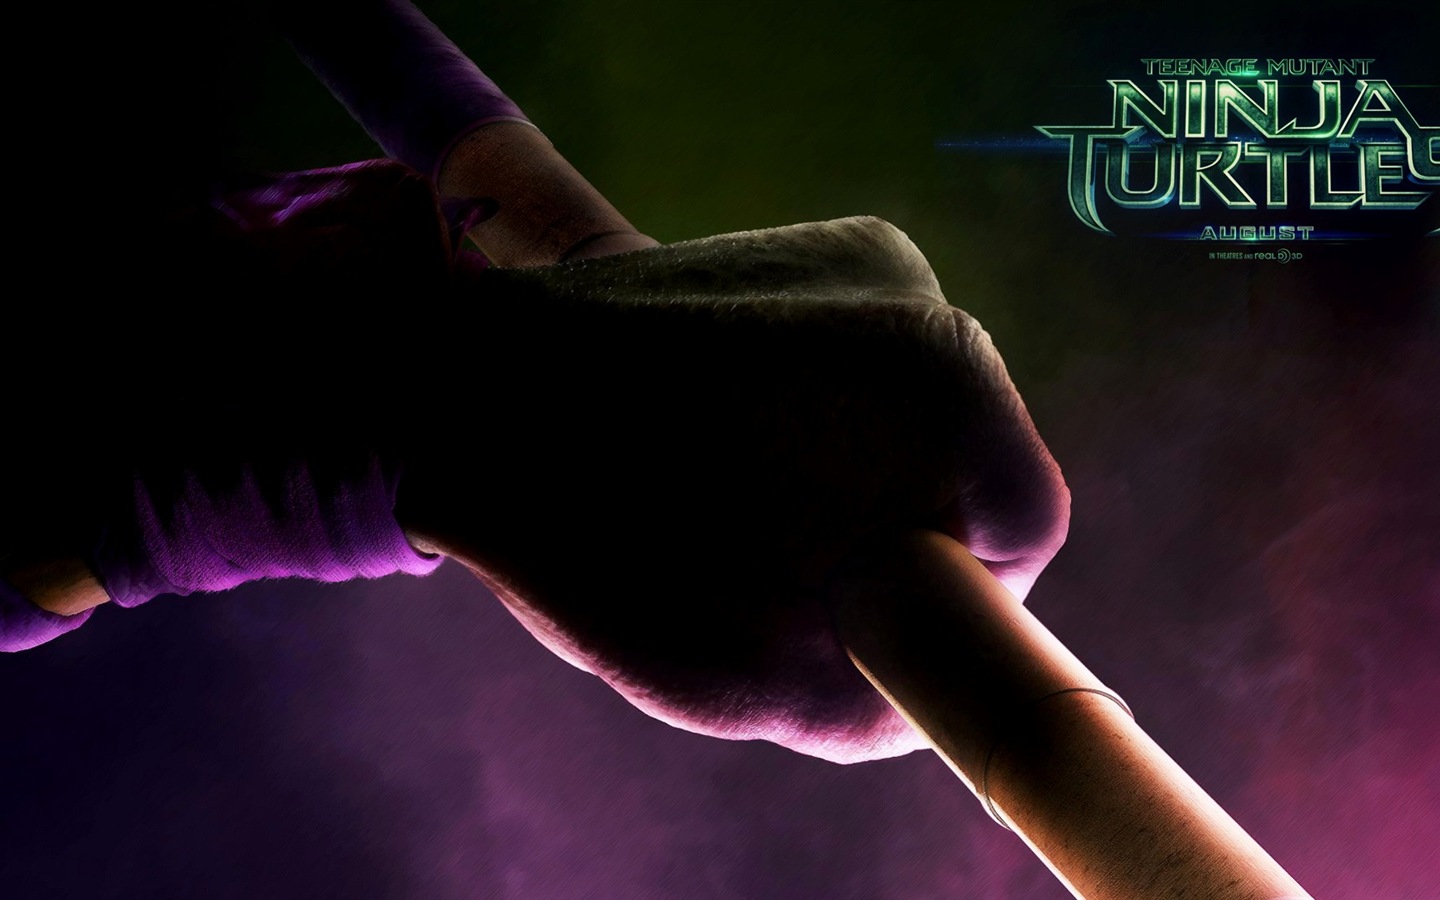 2014 Teenage Mutant Ninja Turtles HD movie wallpapers #6 - 1440x900